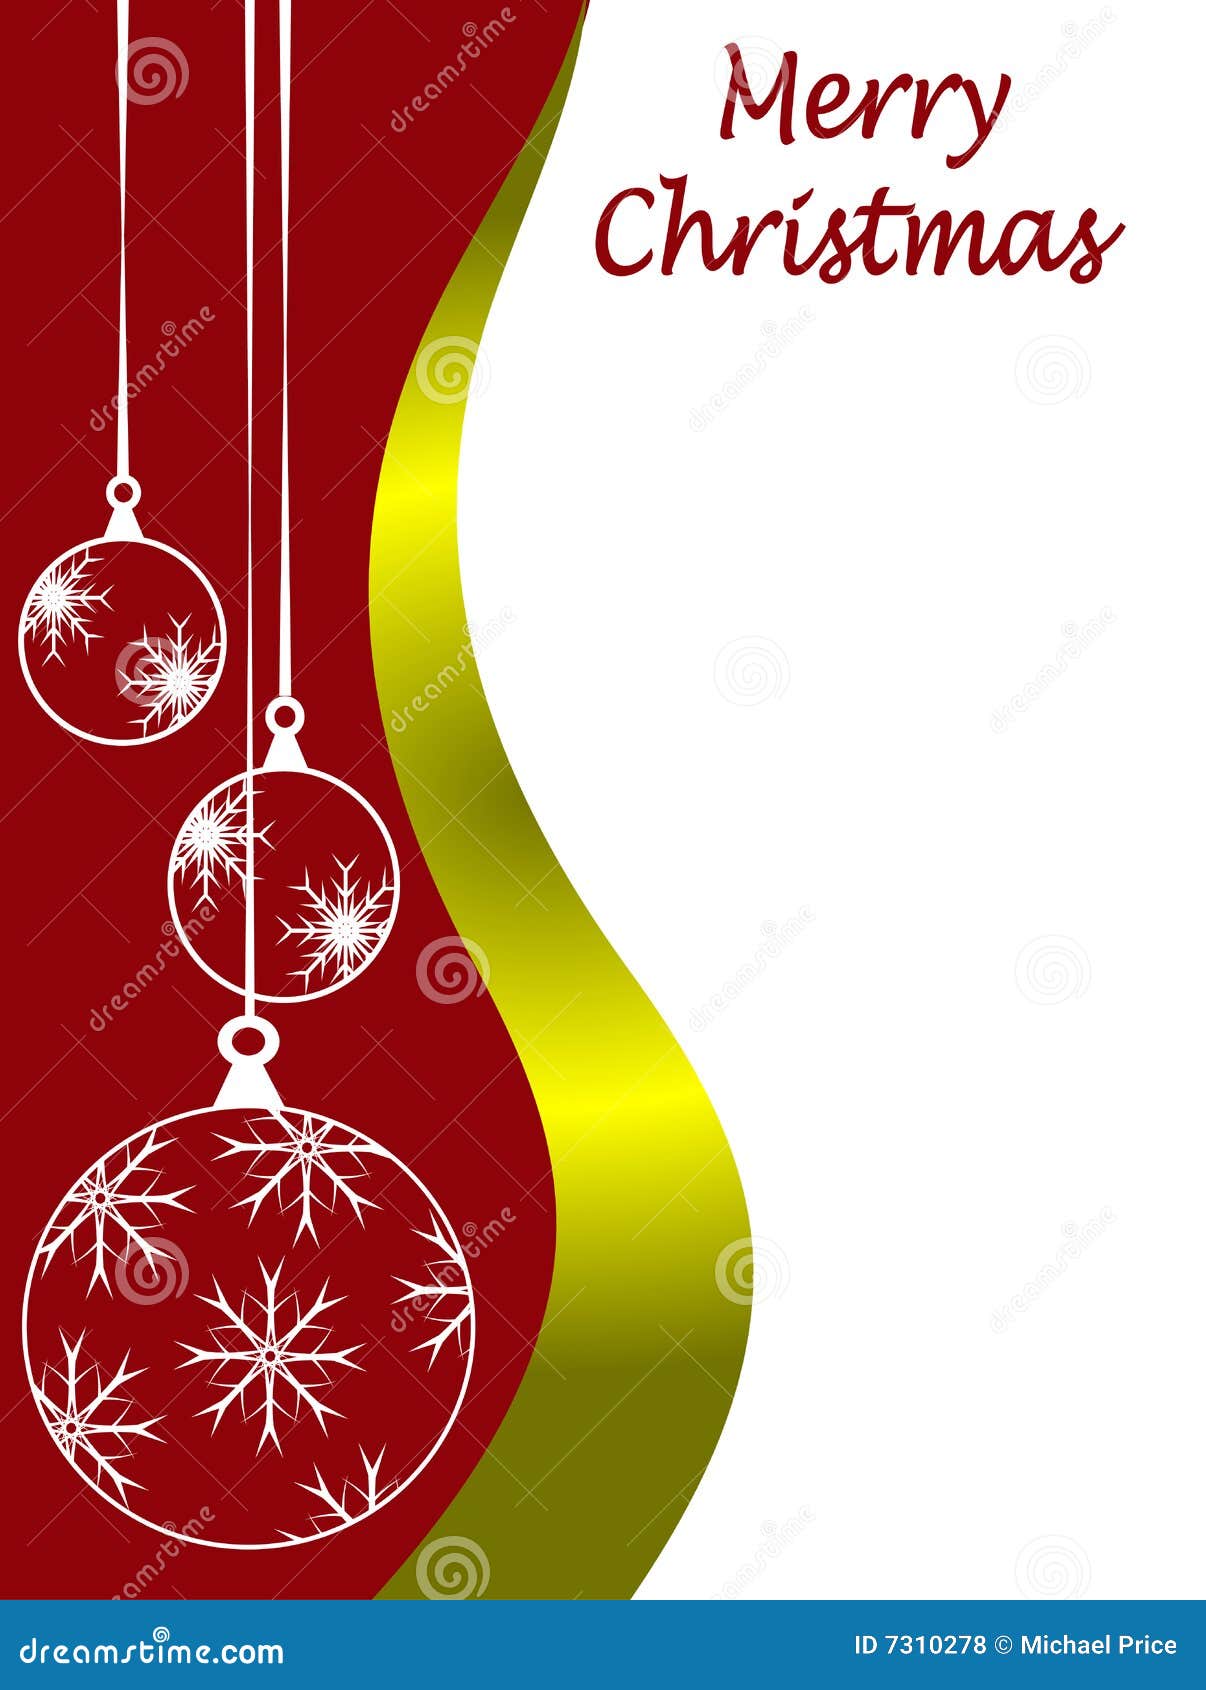 Christmas Card Template stock vector. Illustration of ribbon - 7310278